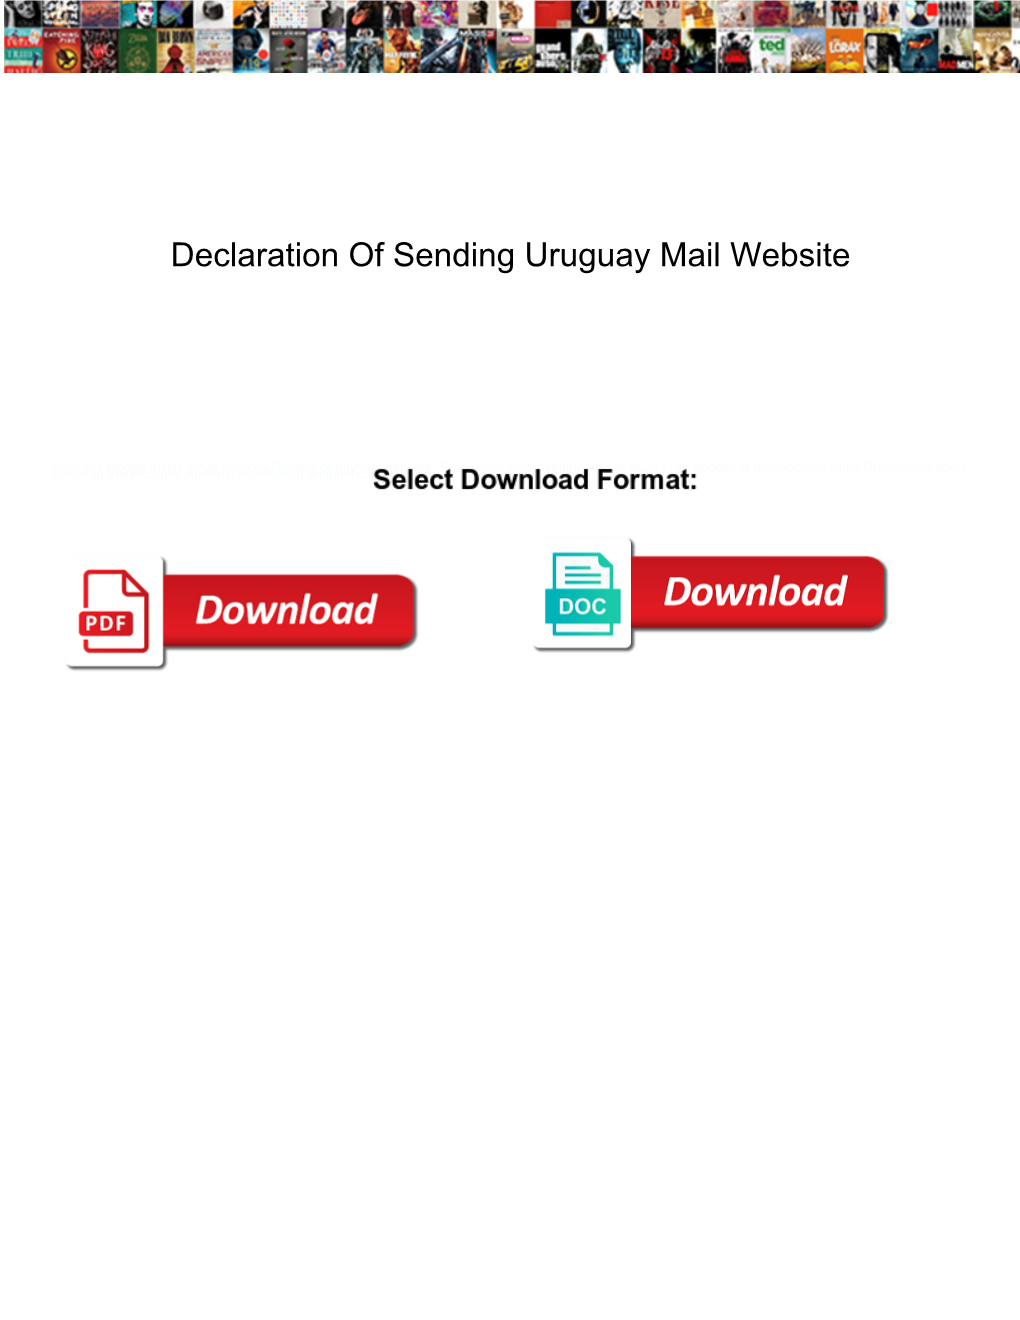 Declaration of Sending Uruguay Mail Website